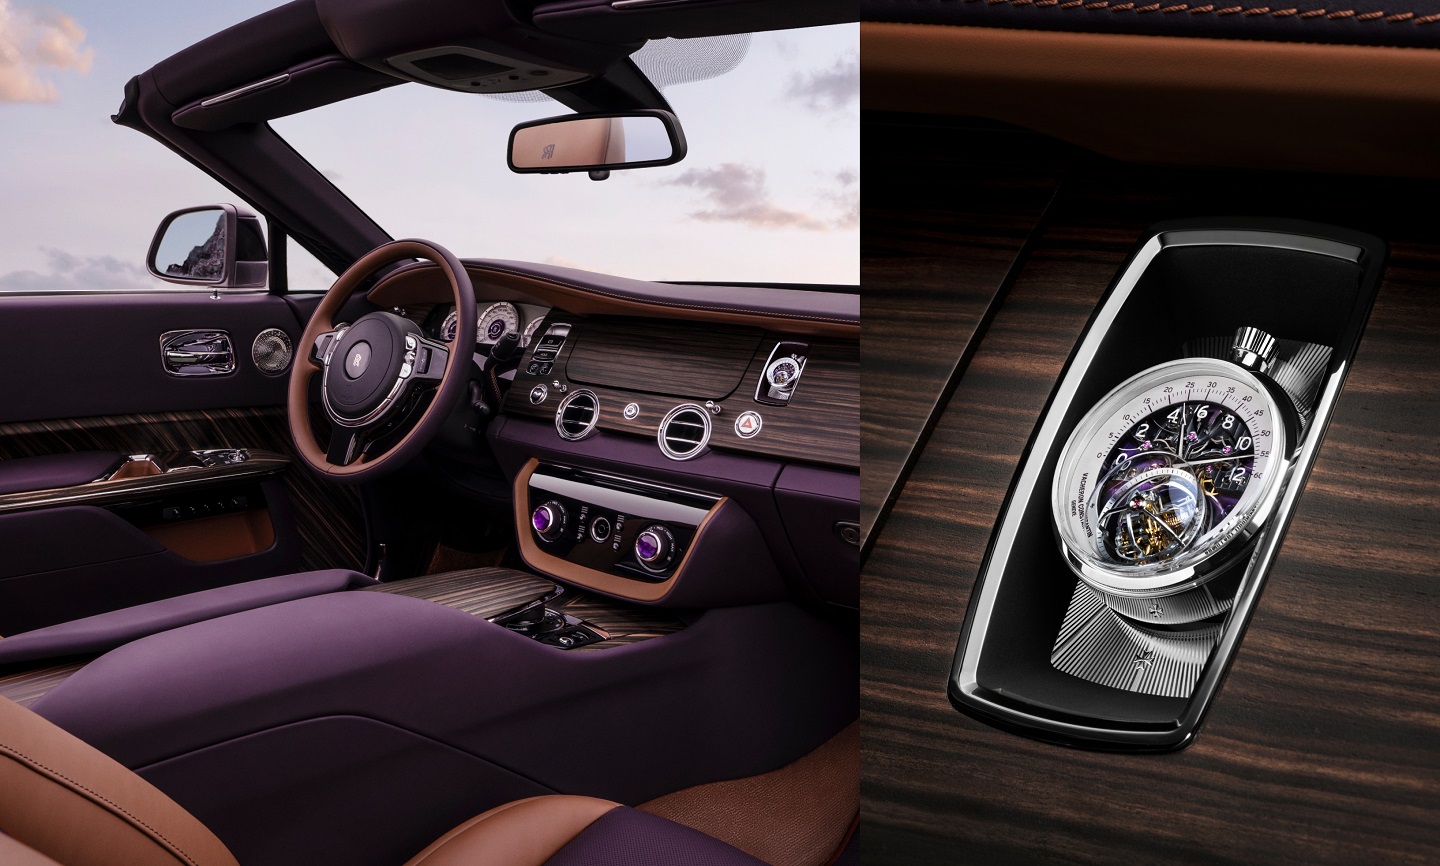 Vacheron Constantin designs fascia timepiece for bespoke Rolls-Royce ...